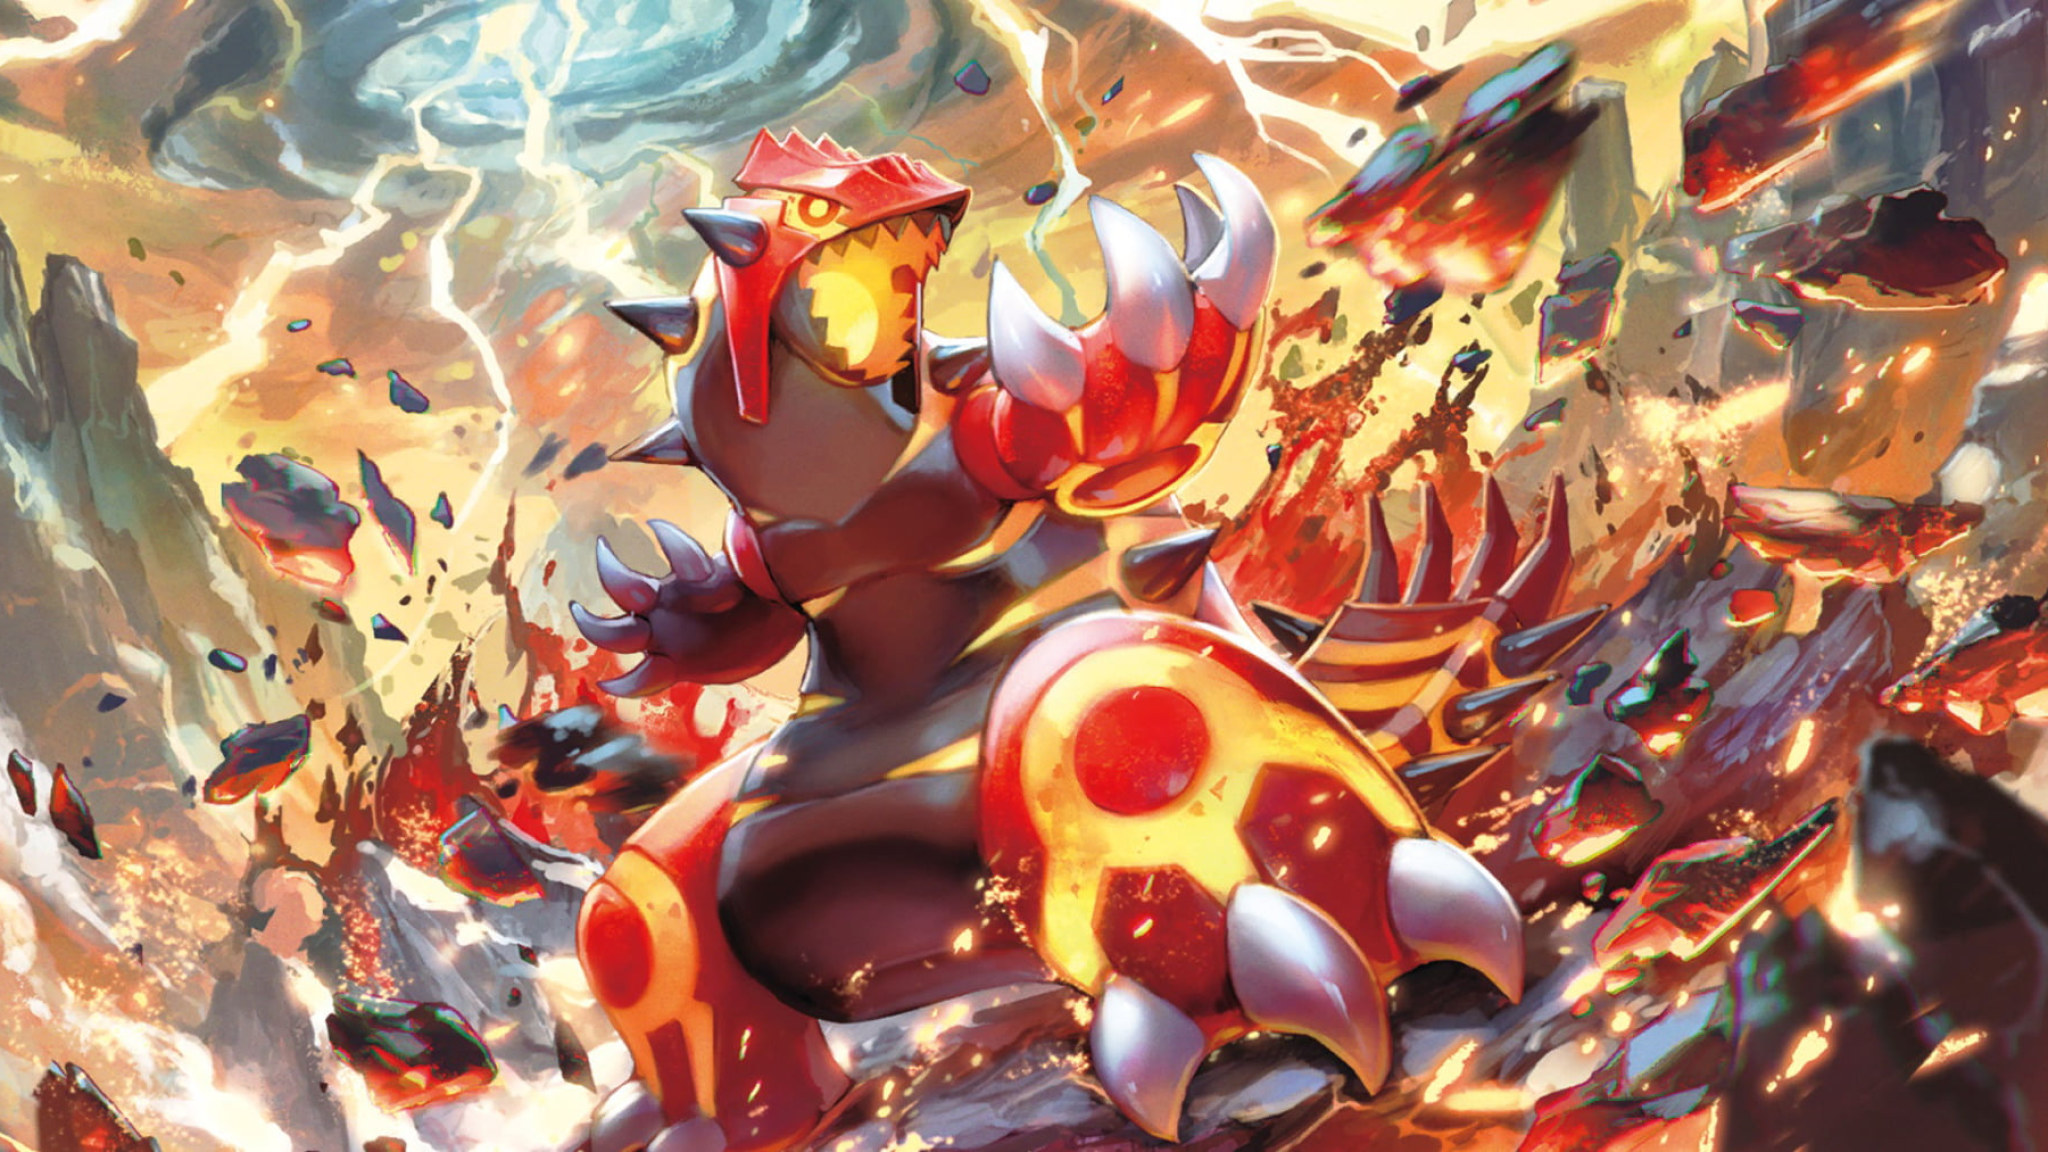 Fire Type Pokemon Digital Wallpaper, Pokémon • Wallpaper For You